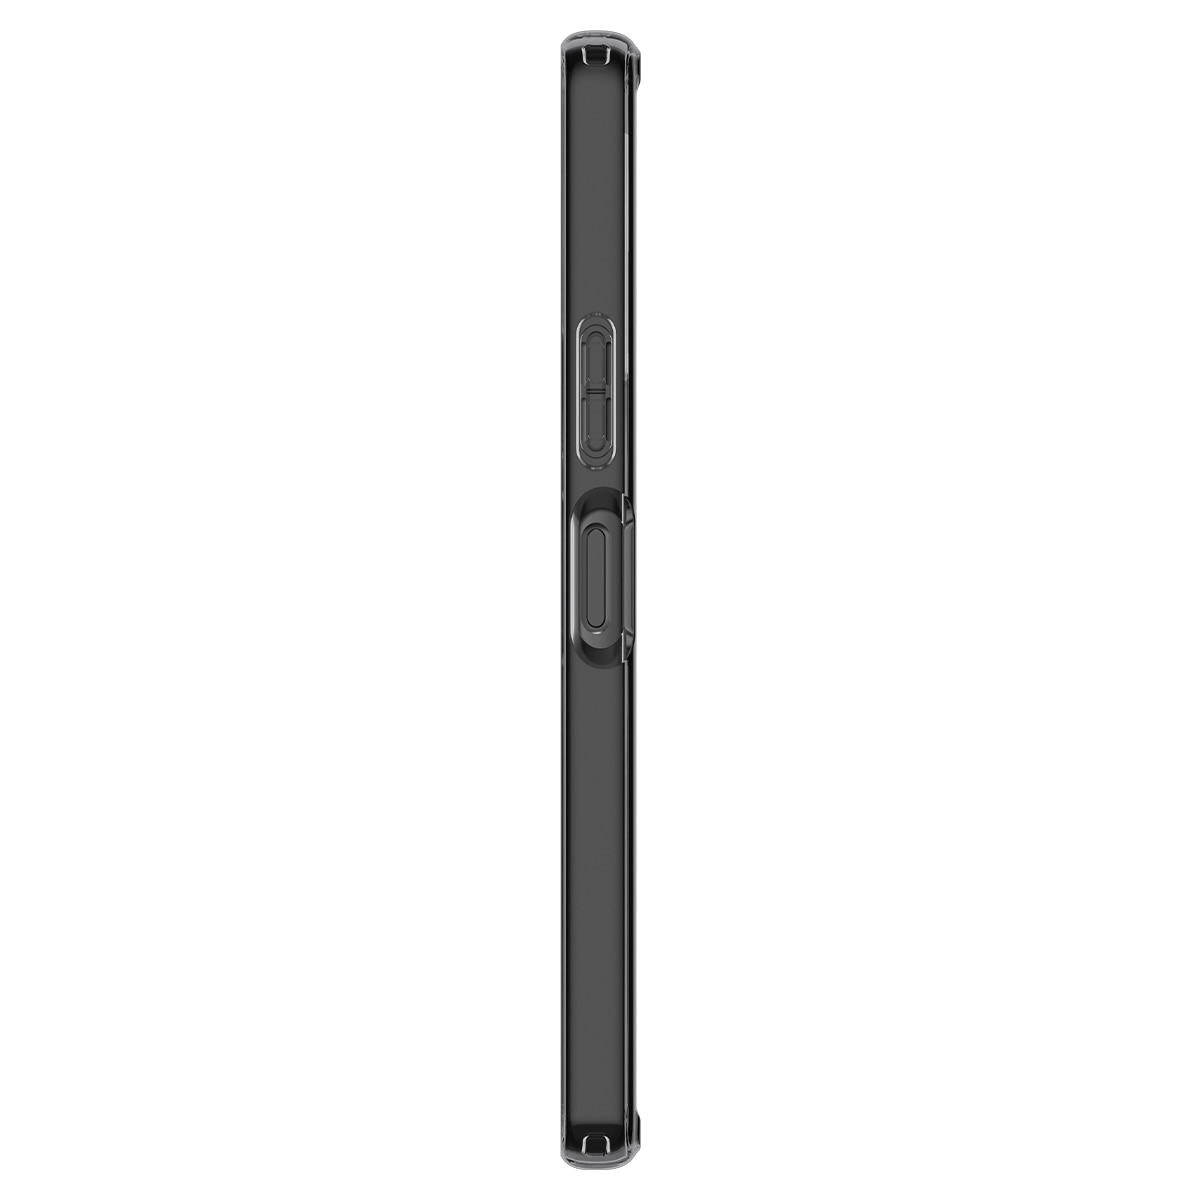 Case Ultra Hybrid Sony Xperia 10 V Zero One